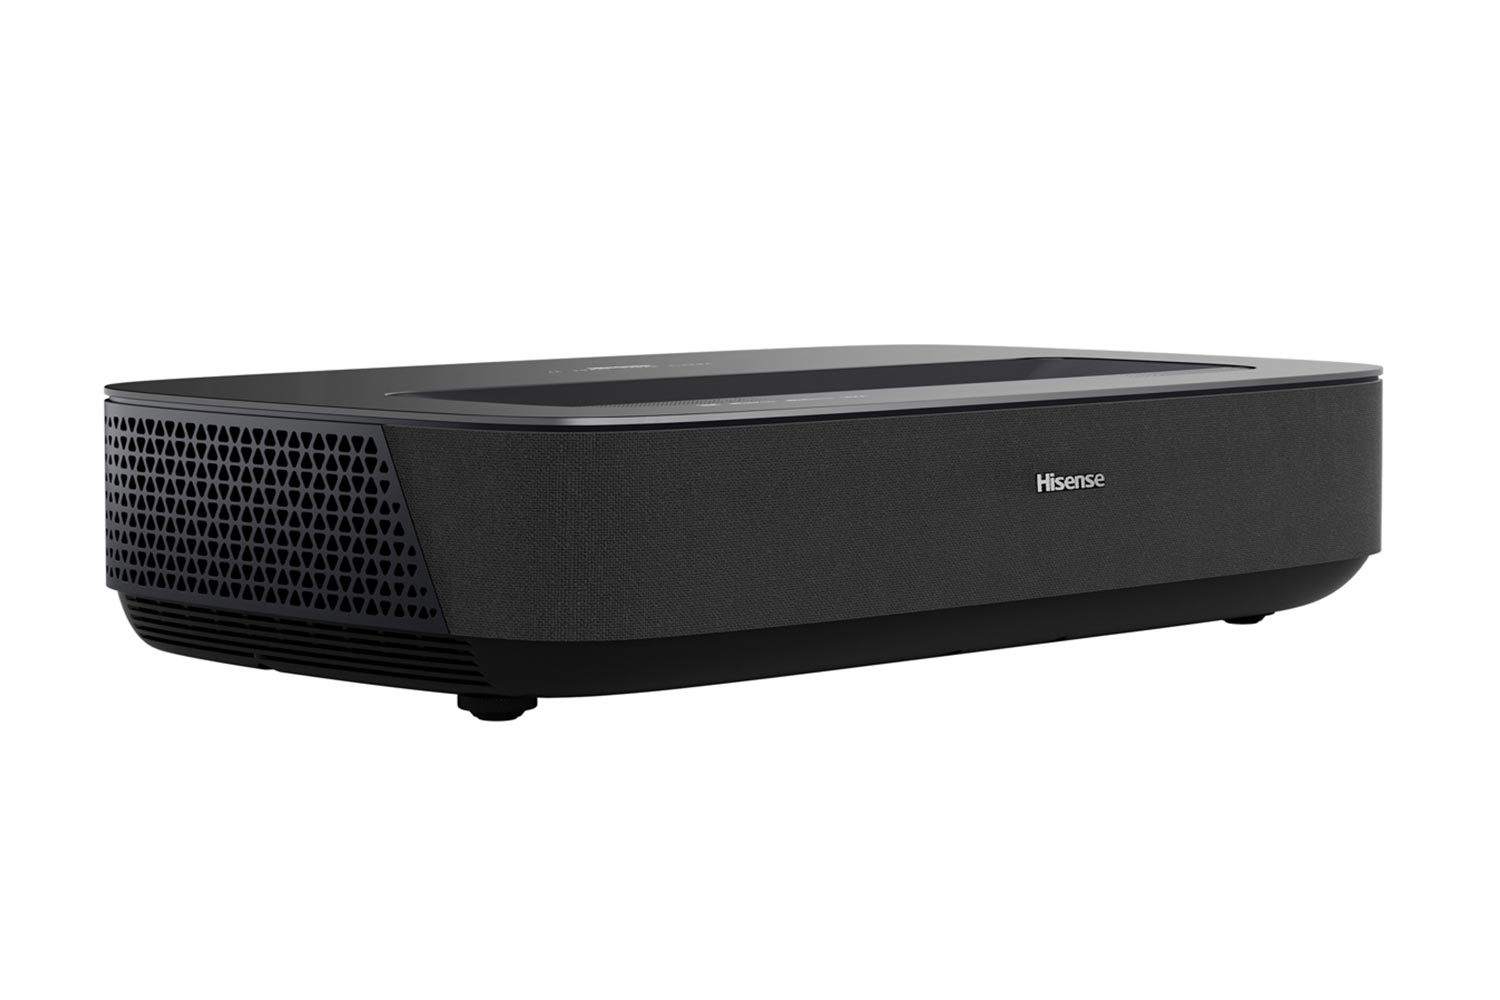 Hisense PL1SE 4K Ultra HD Laser TV - HEIMKINORAUM Edition